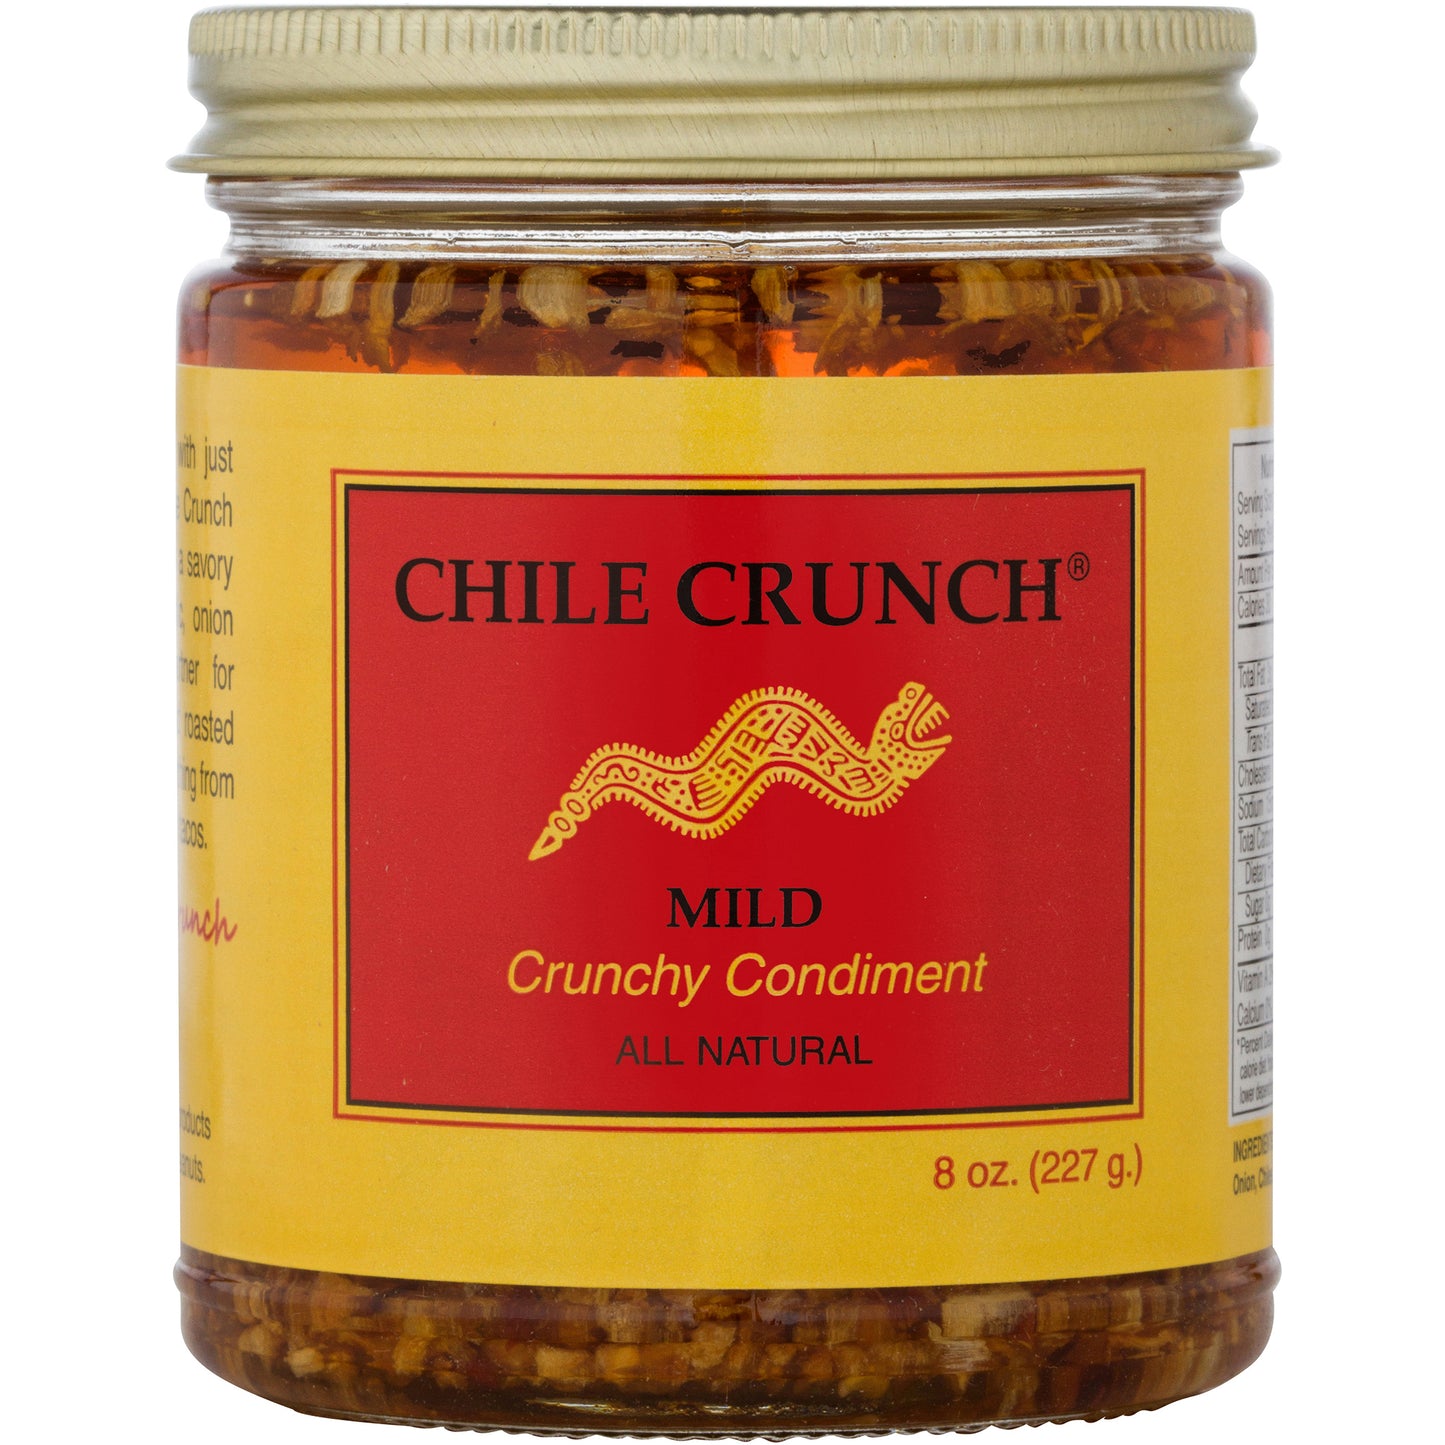 Chile Crunch Original